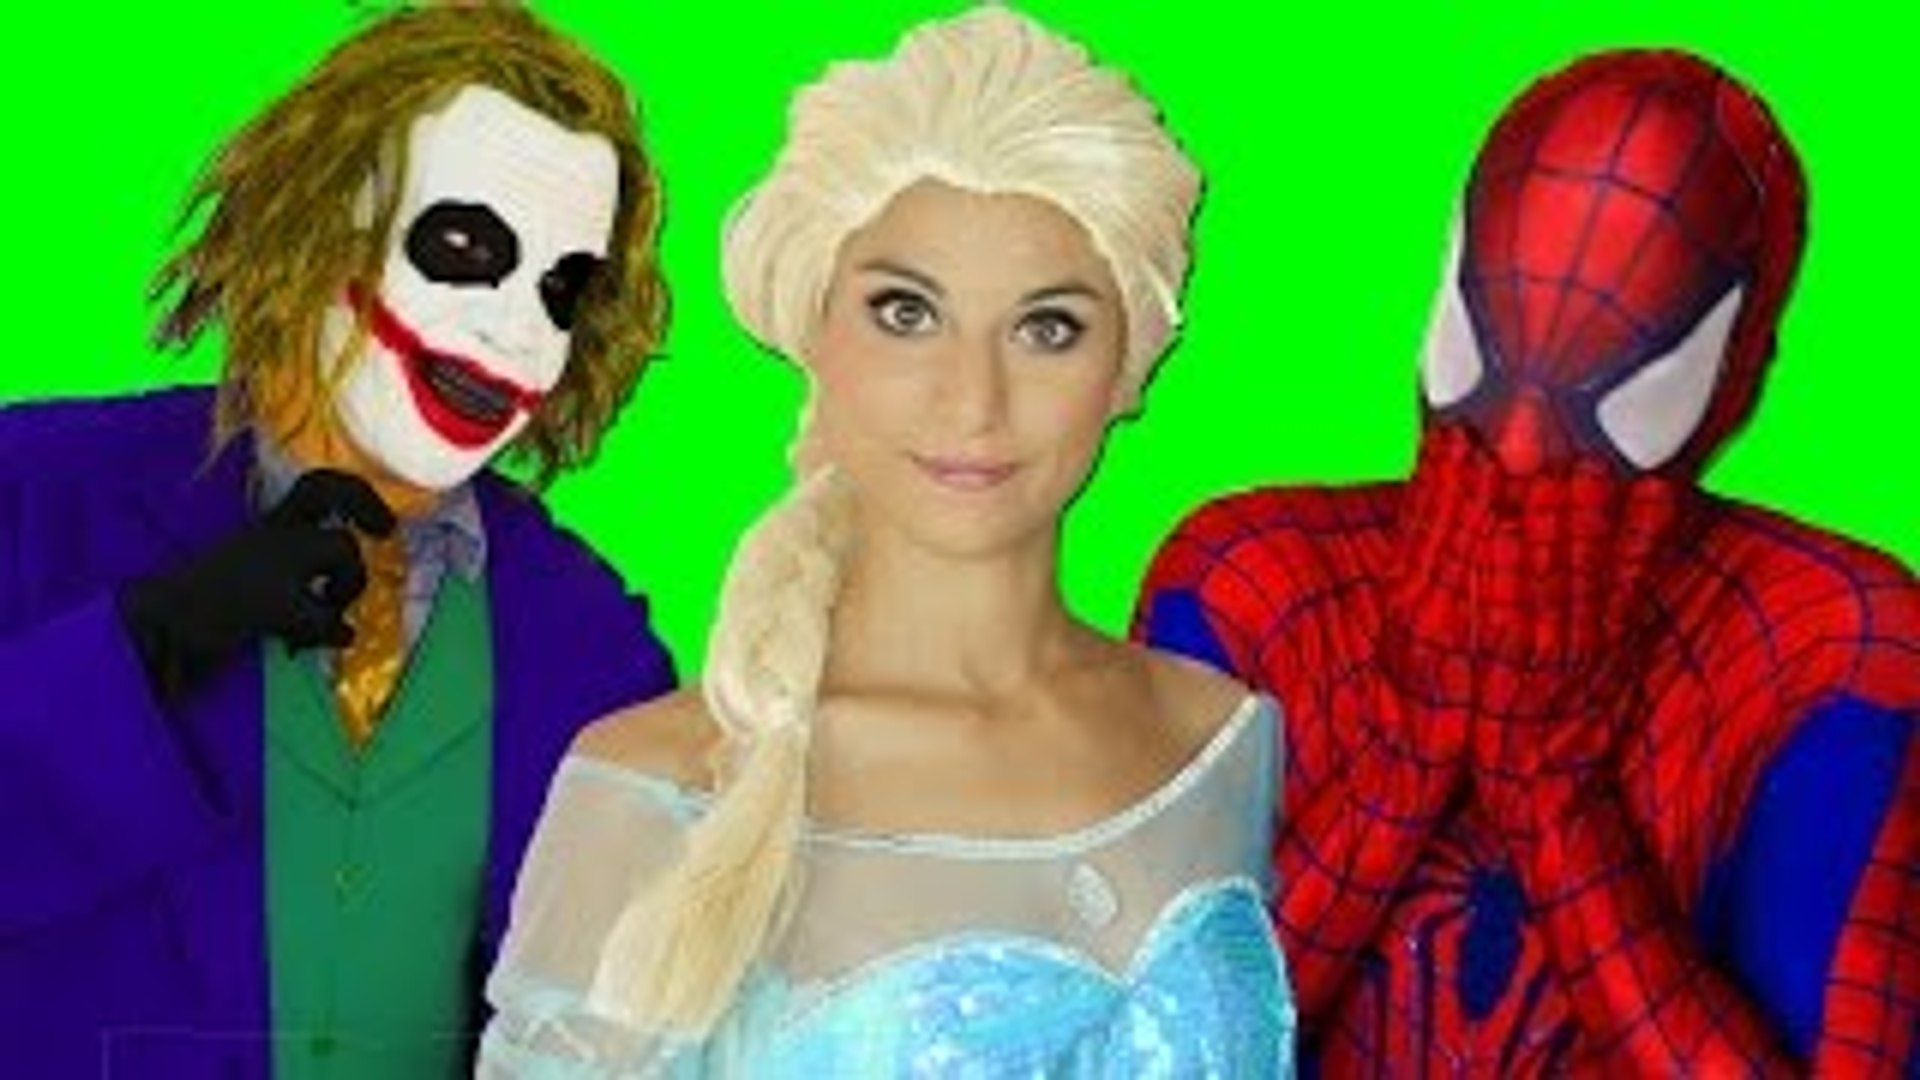 Spiderman vs Venom vs Frozen Elsa vs batman vs Joker in Real Life -  Superheroes Life Trail - Dailymotion Video